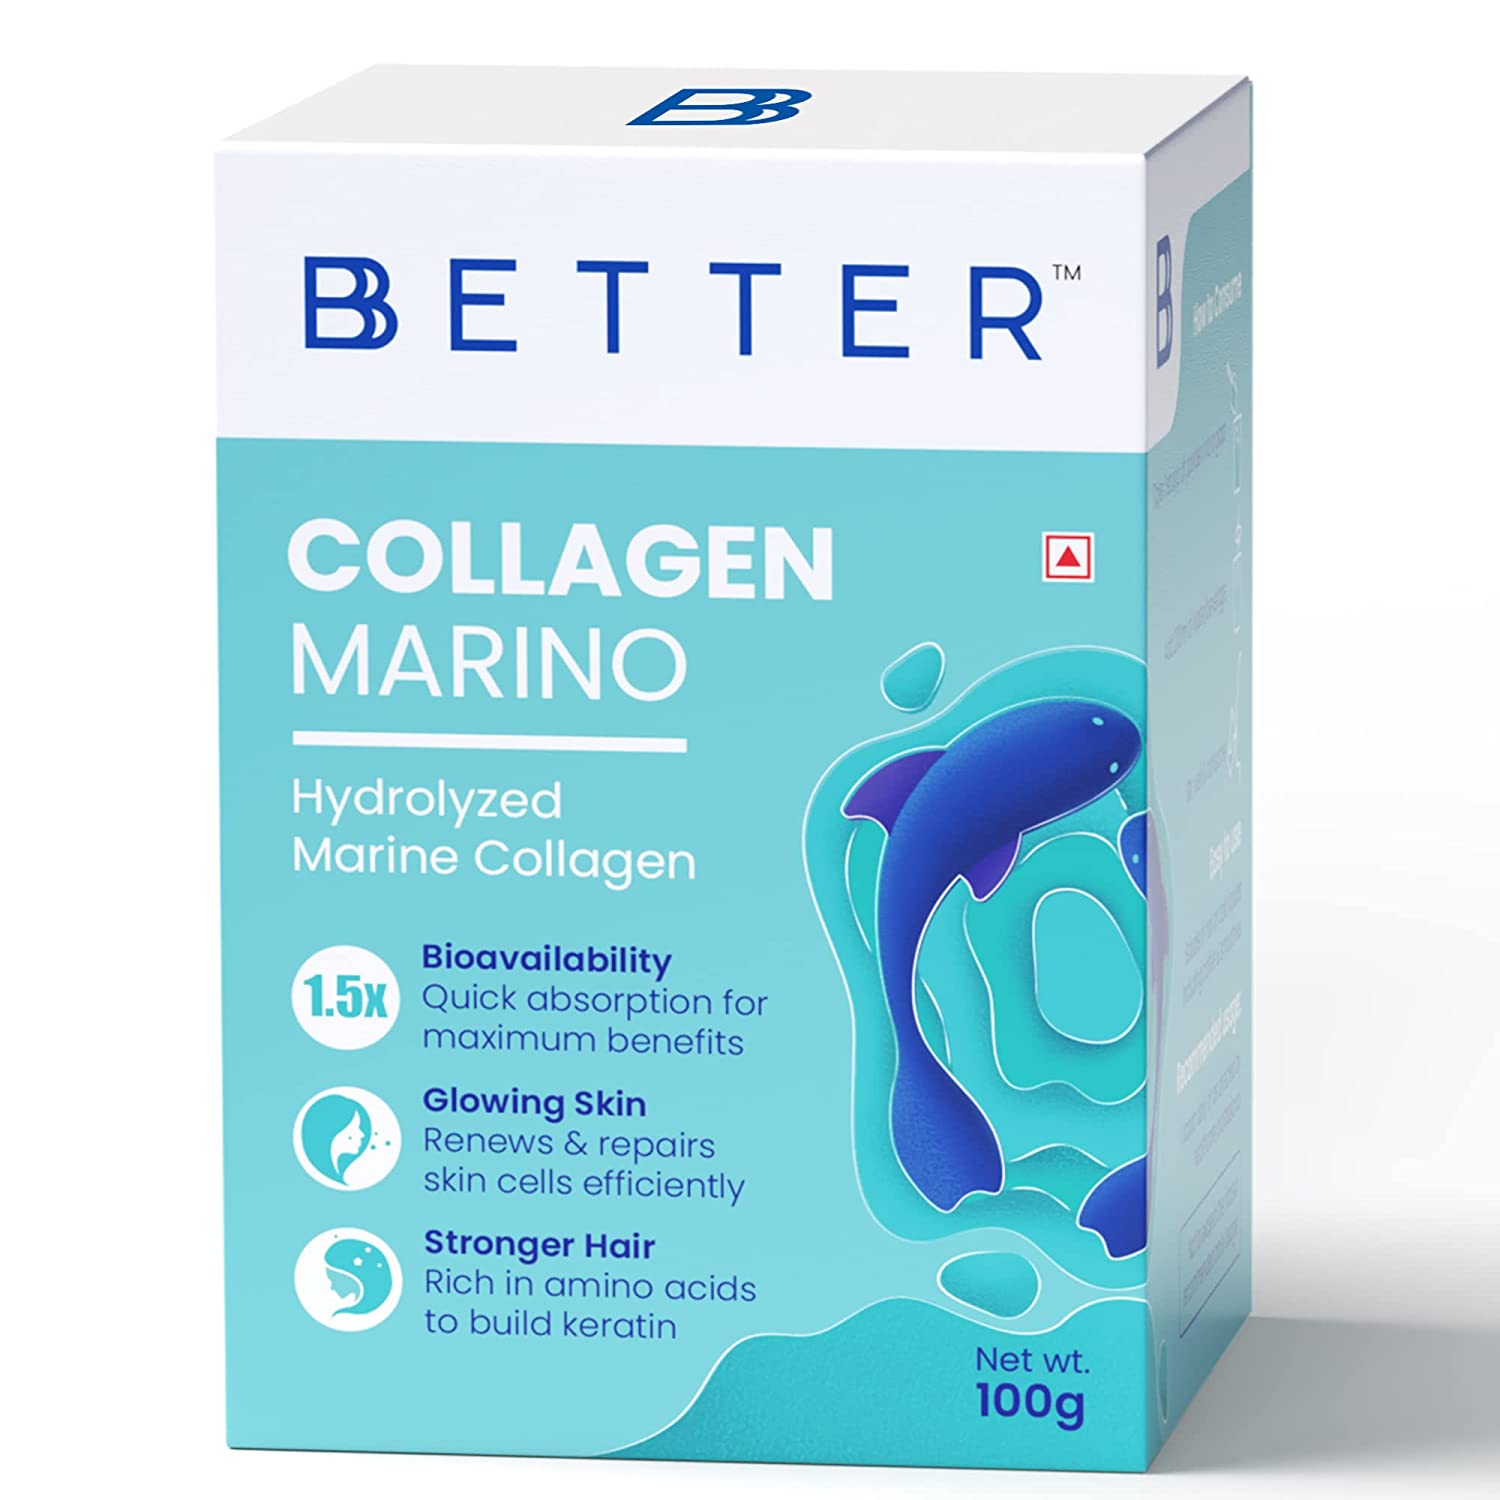 BBetter Collagen Marino Image